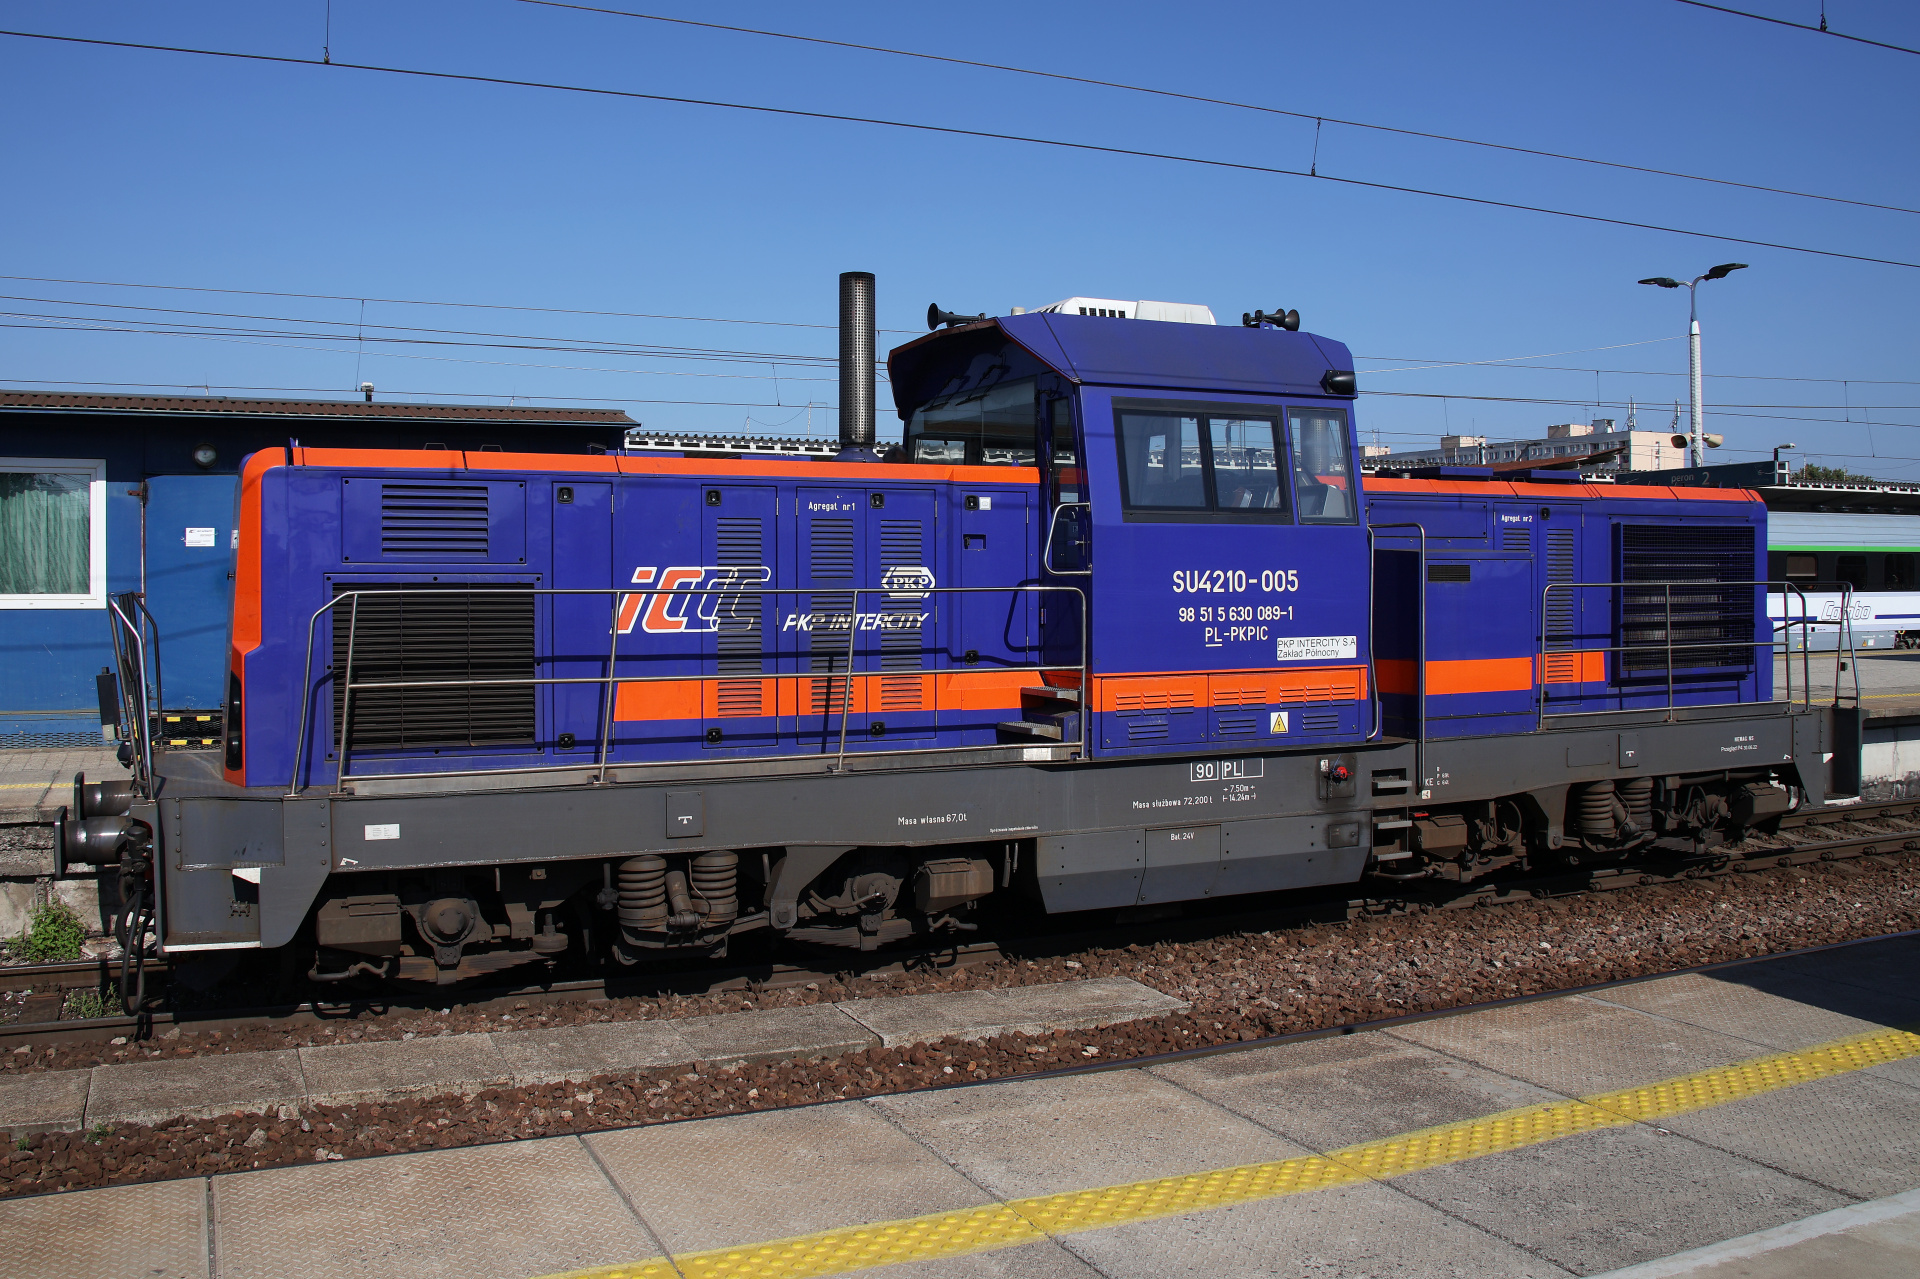 Newag 6Dl SU4210-005 (Vehicles » Trains and Locomotives)